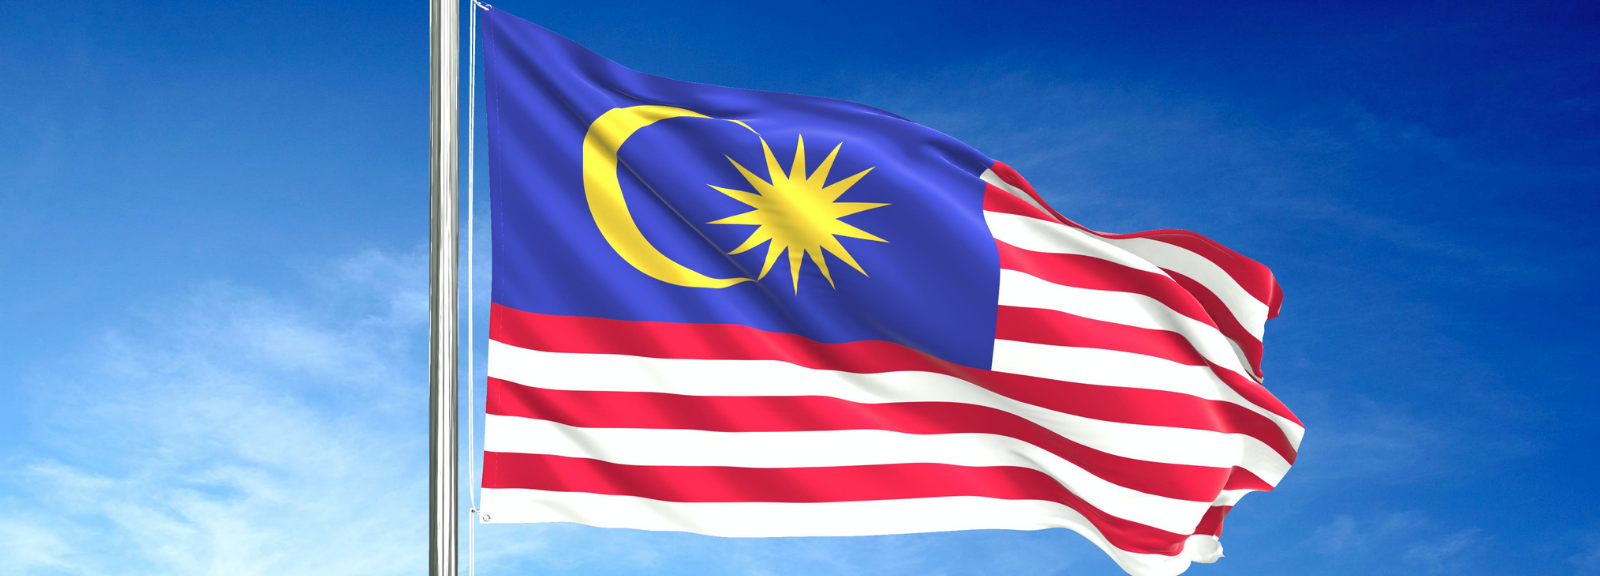 Flag of Malaysia.
